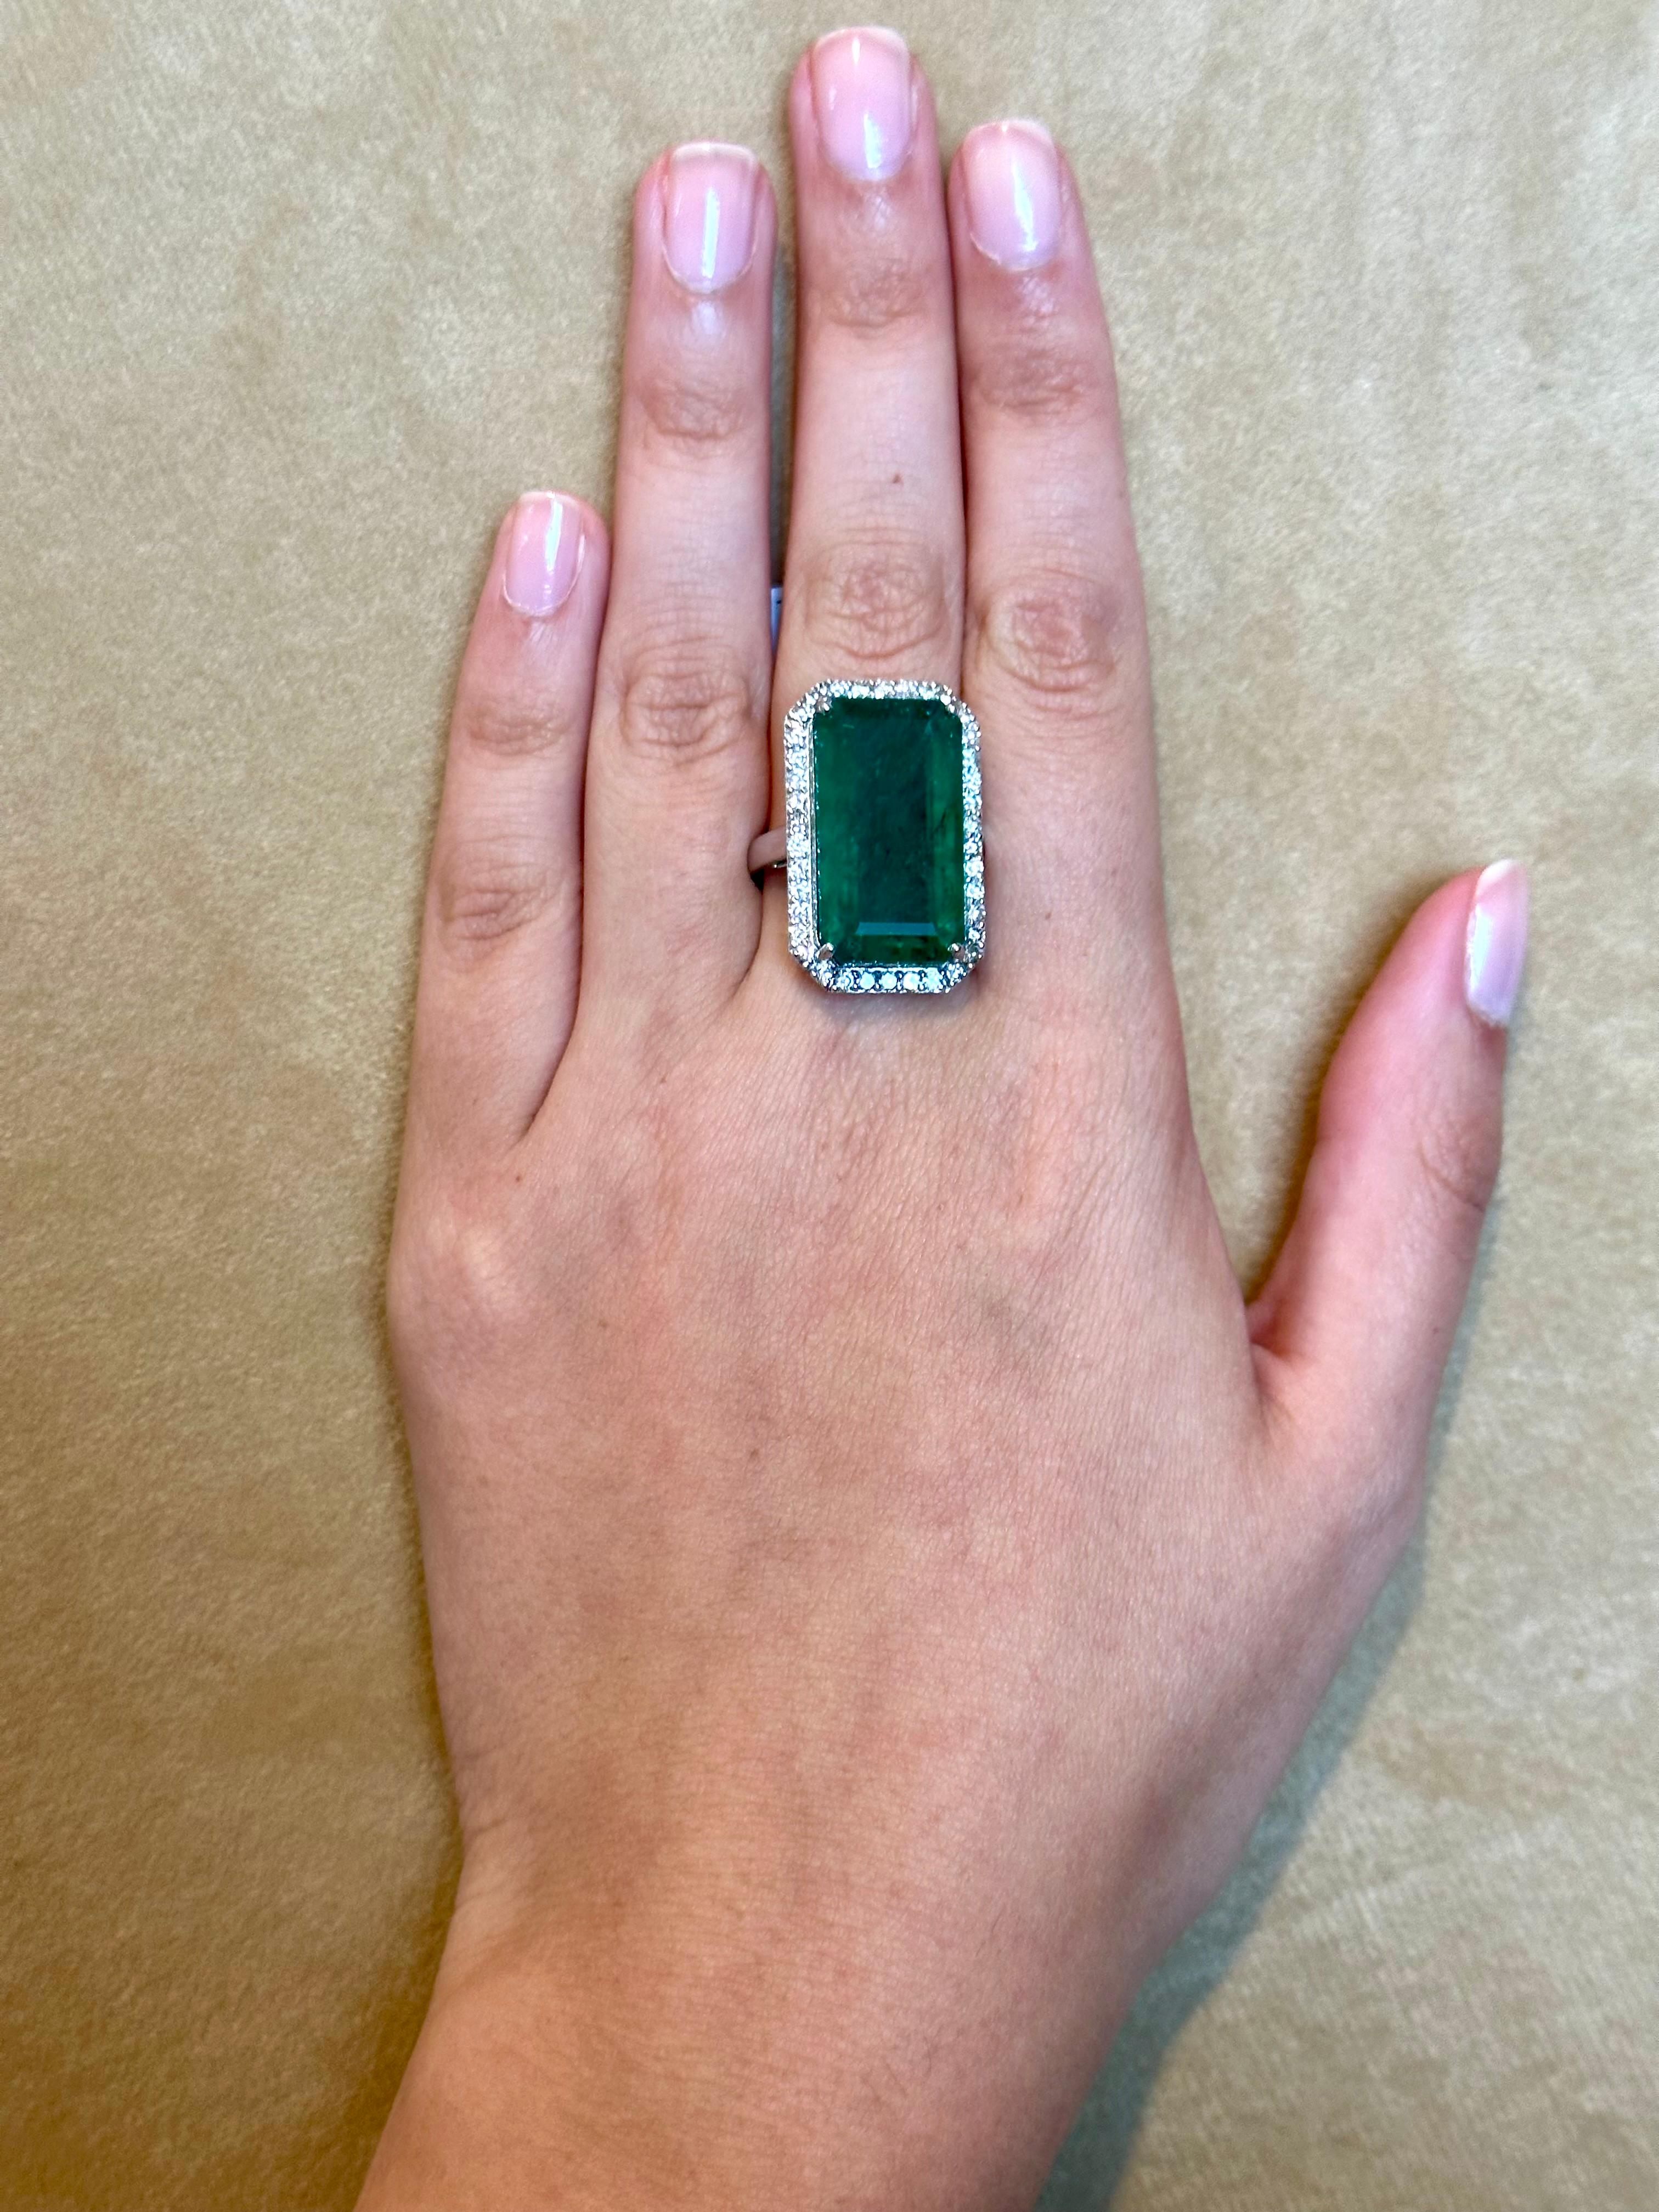 Natural 16 Carat Emerald Cut Zambian Emerald & Diamond Ring in 14kt White Gold For Sale 9